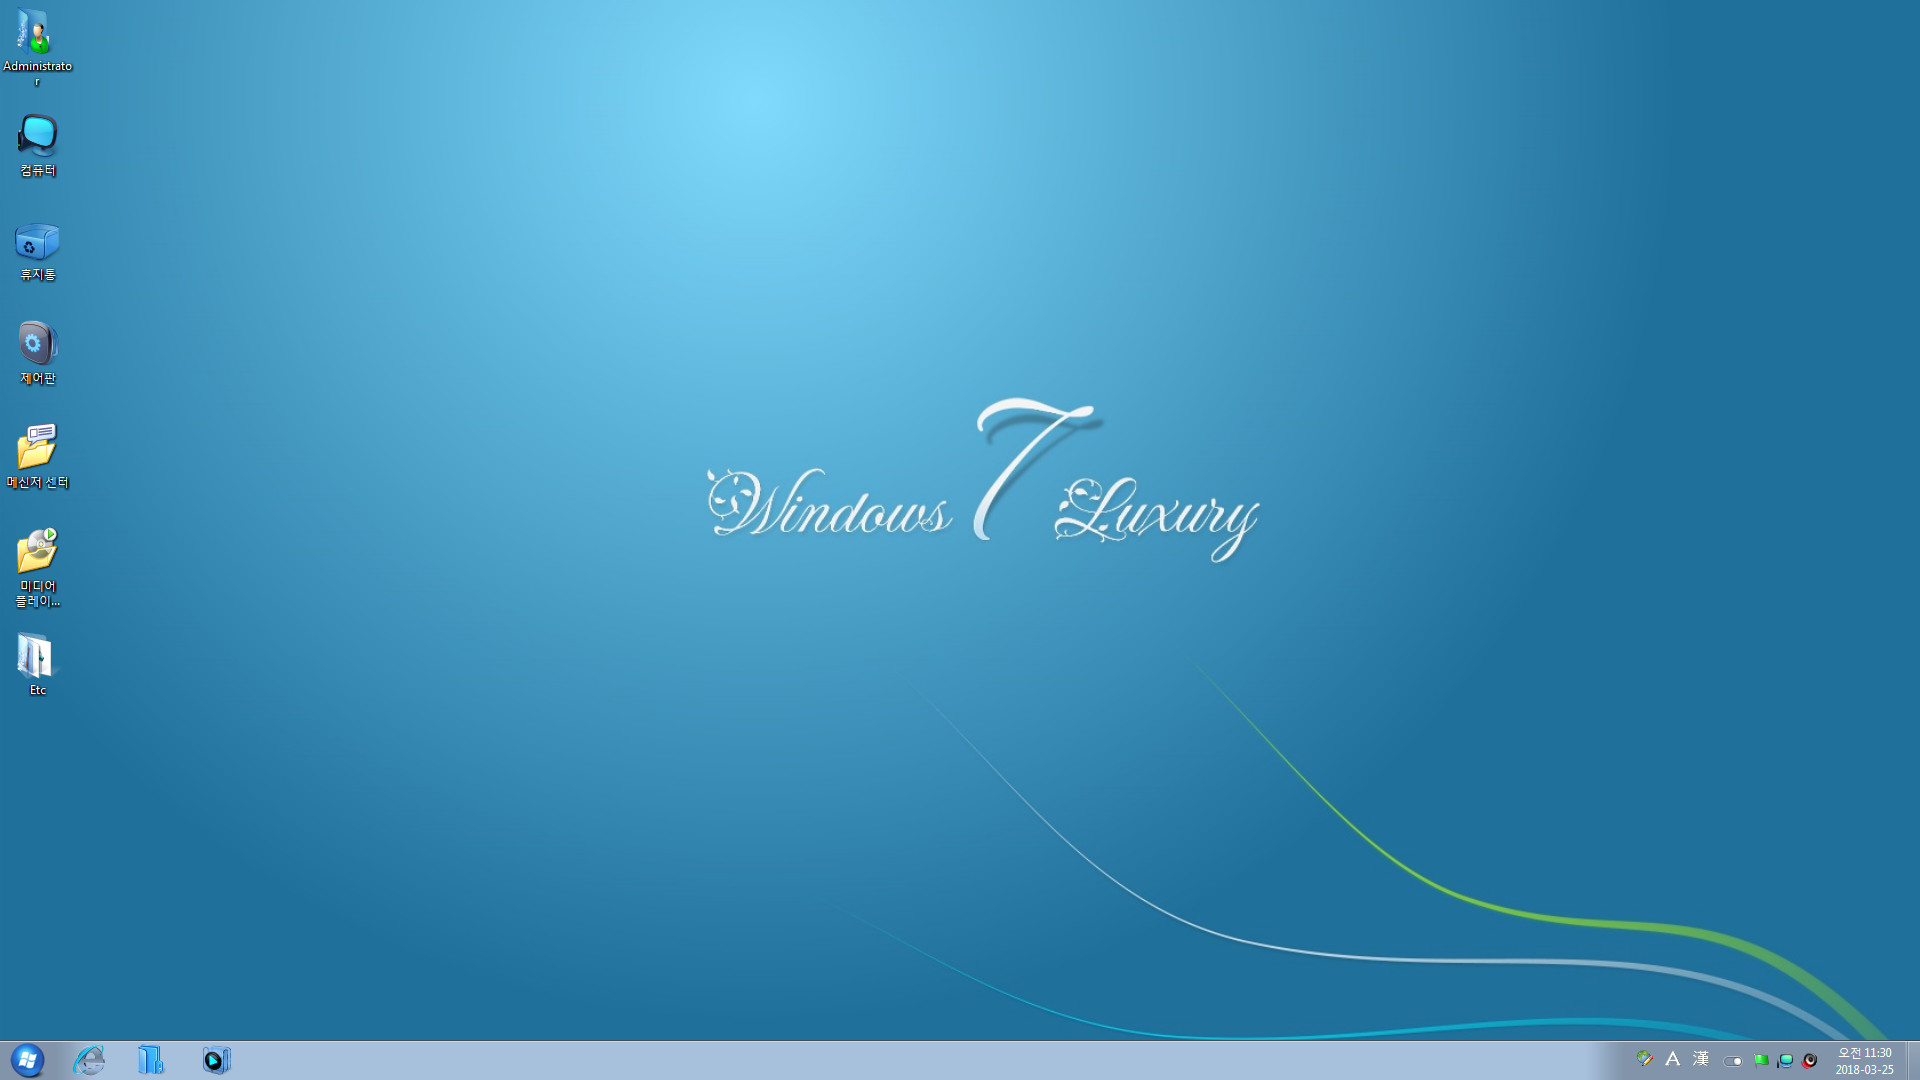 Windows_7_LUXURY_0008.jpg